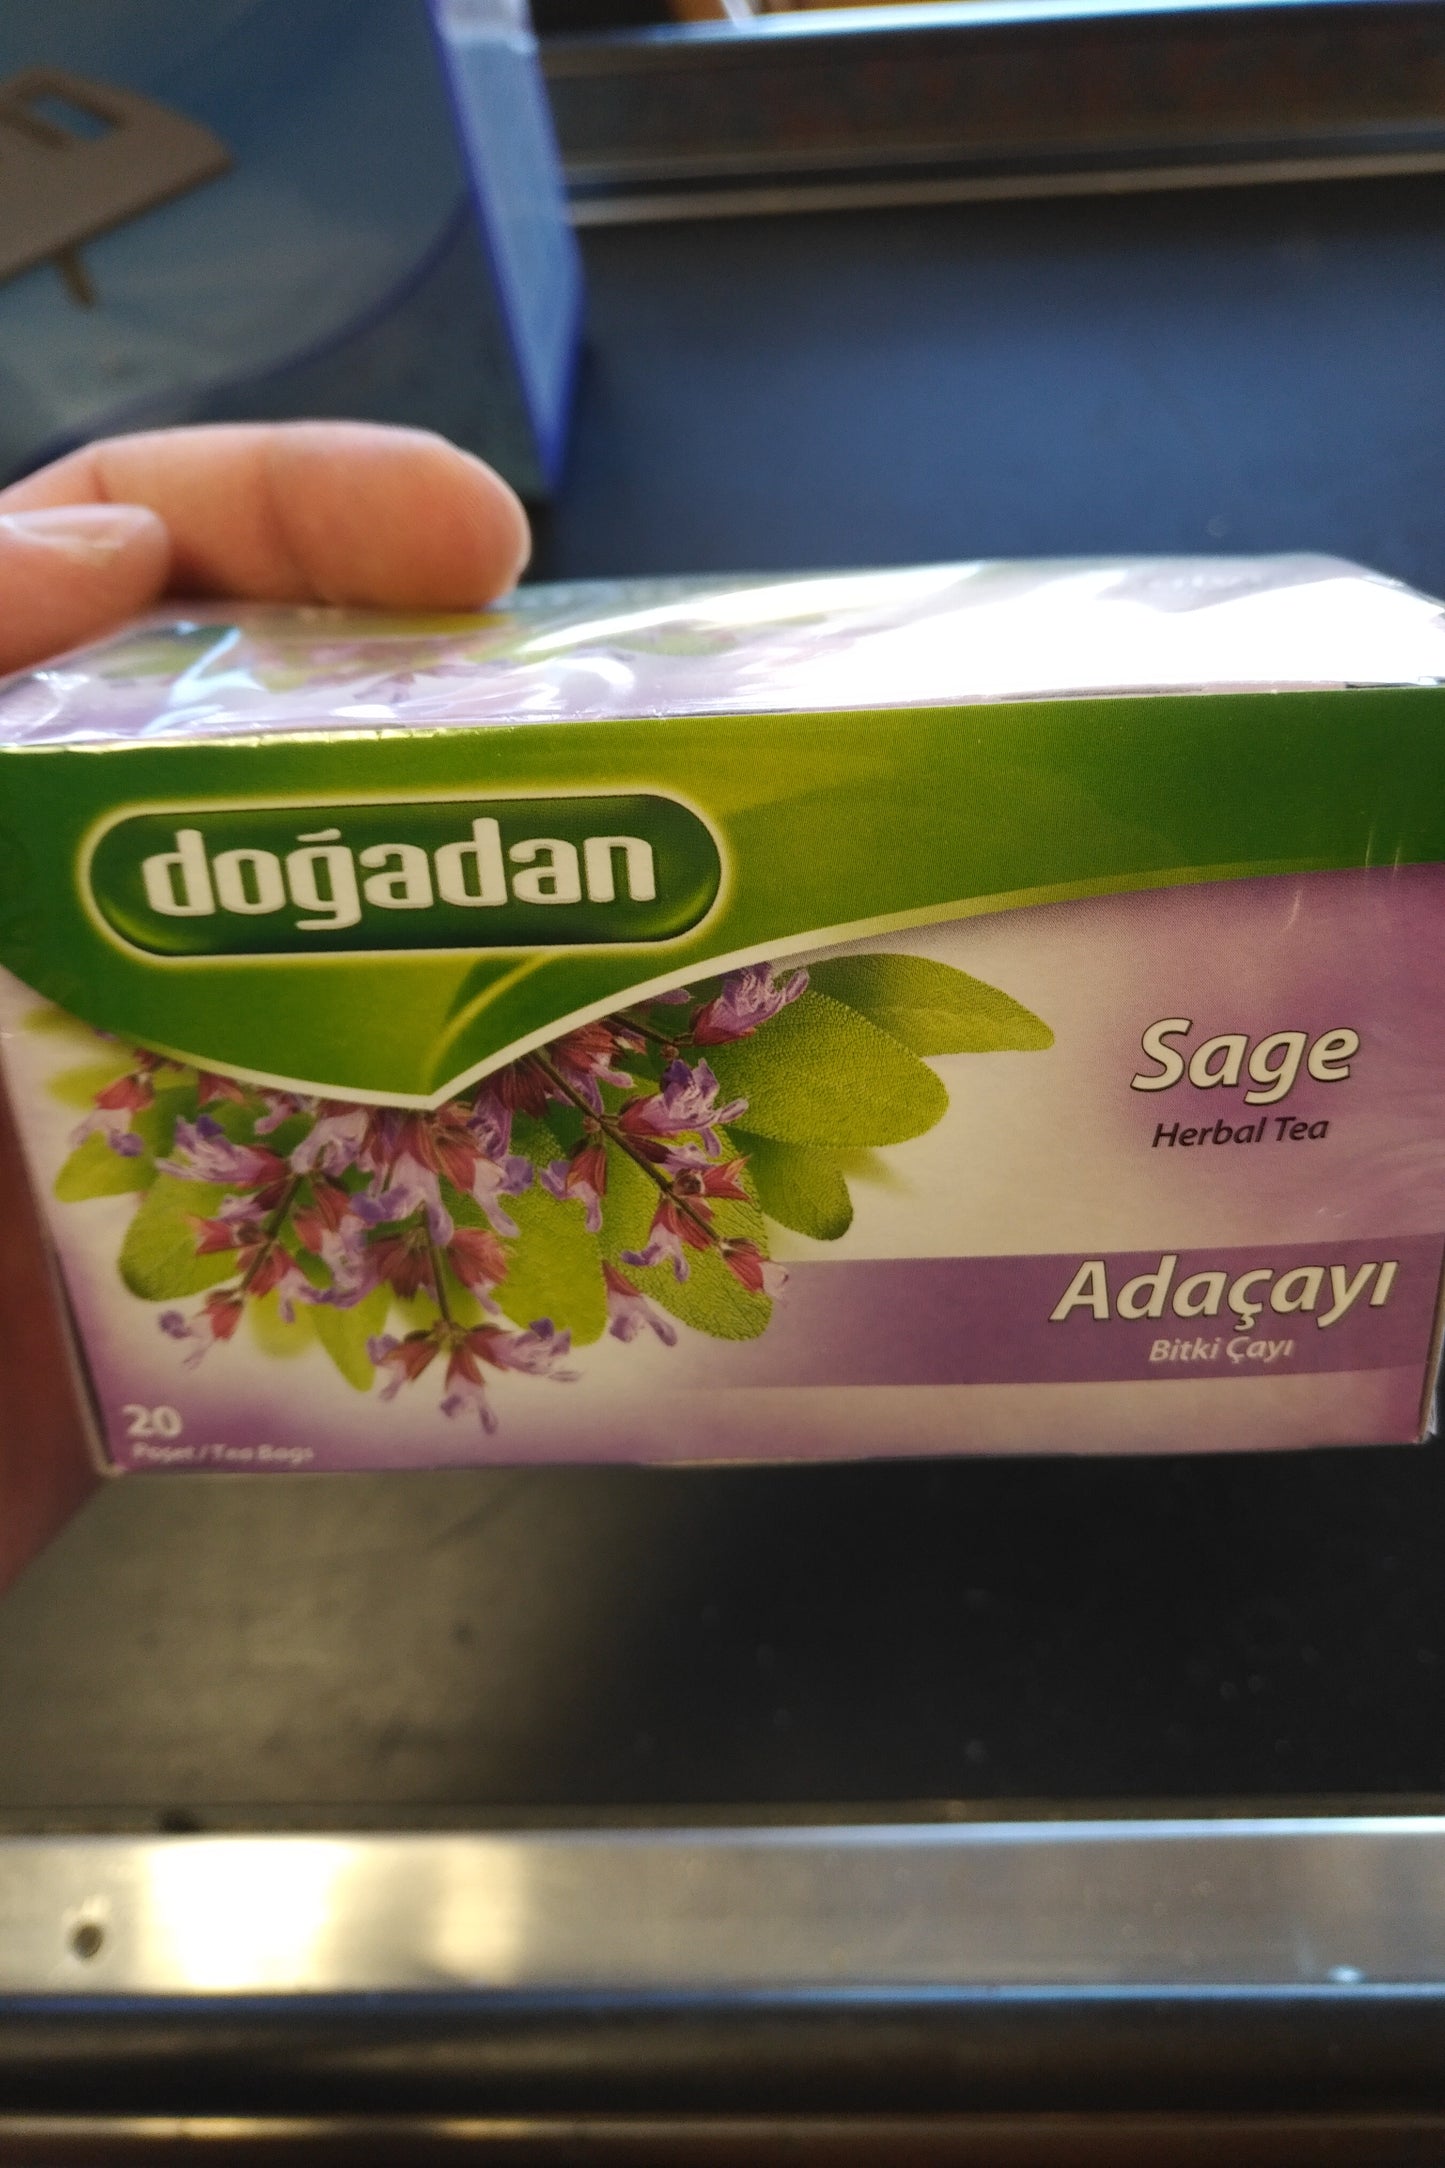 Dogadan Sage Herbal Tea Adacayi Bitki Cayi 20 tea Bags